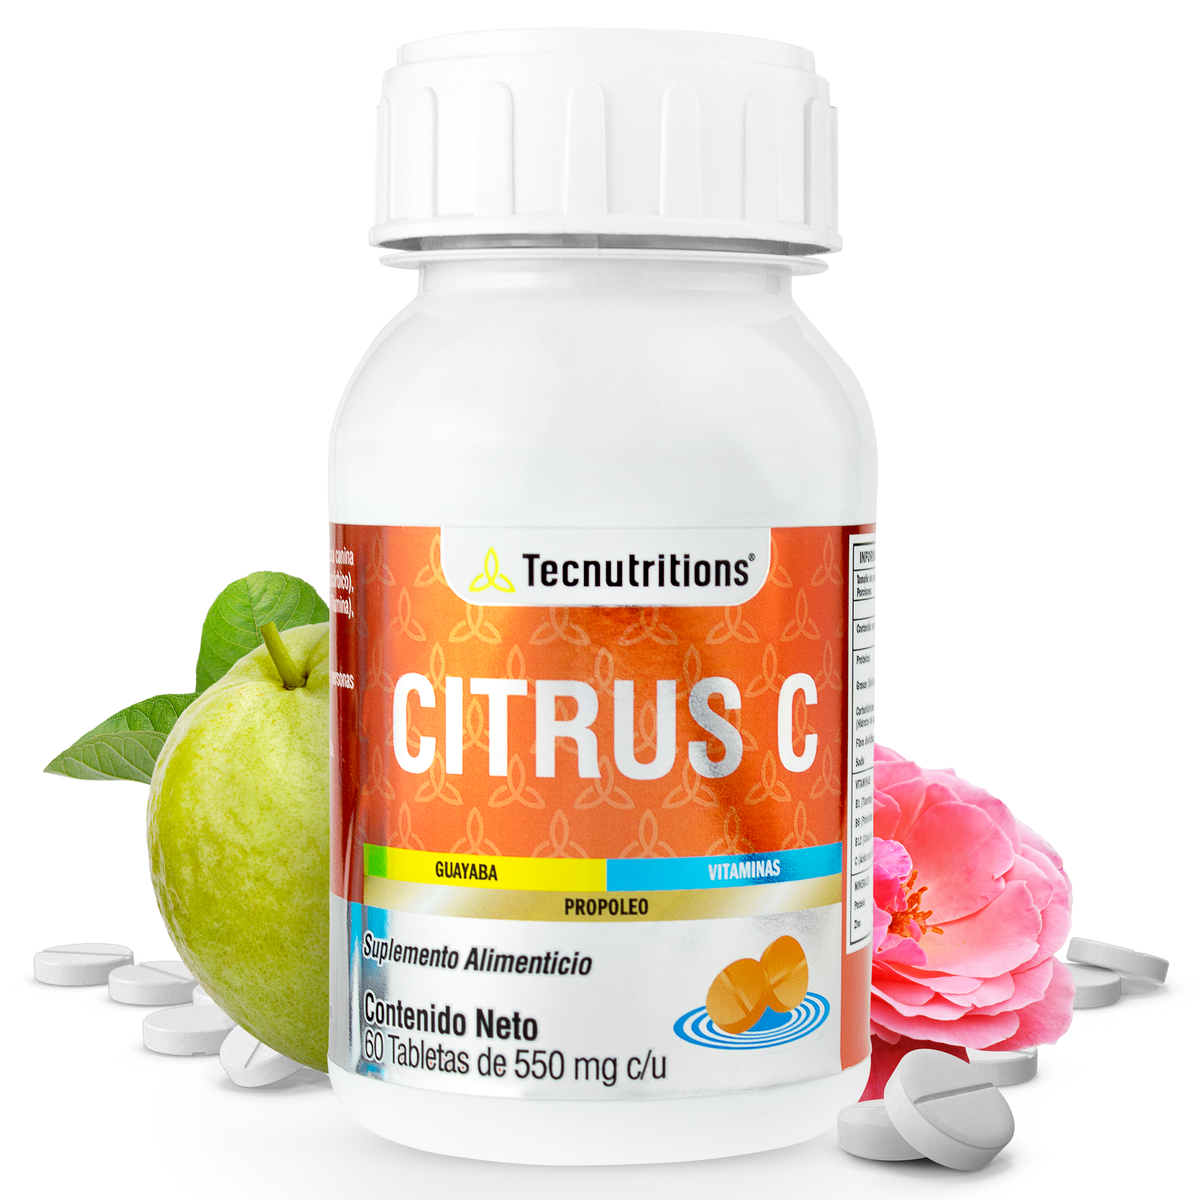 Suplemento alimenticio Citrus C, 60 tabs, con vitamina c, zinc, propóleo, sistema inmune